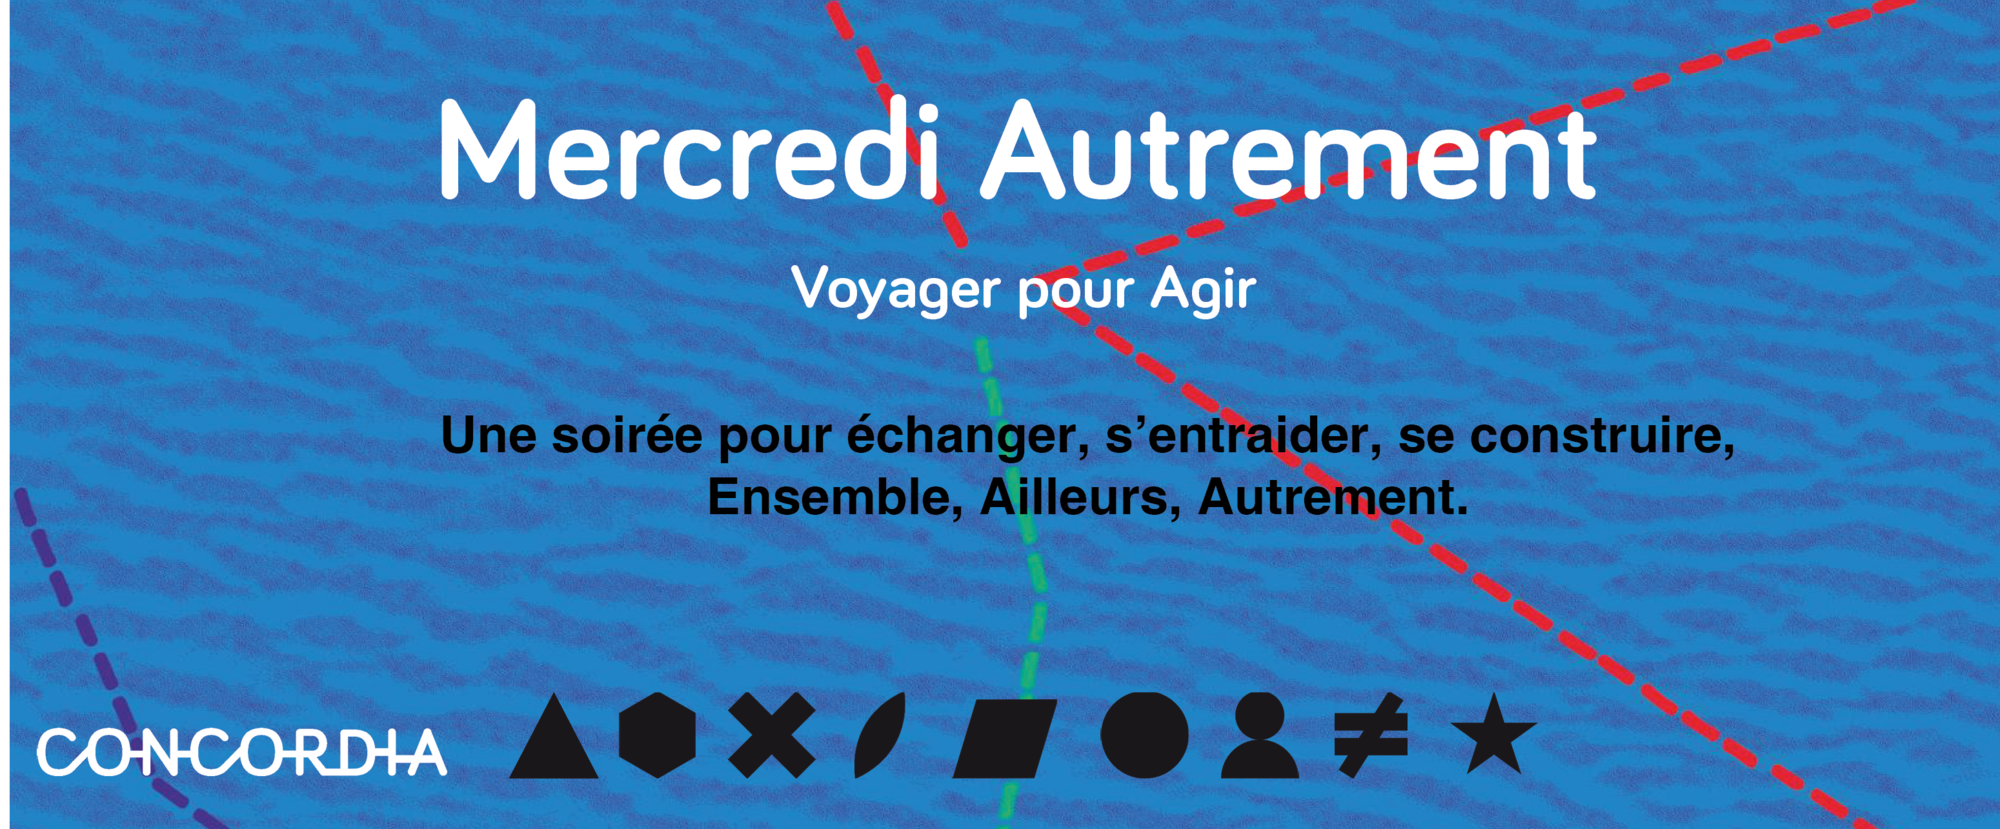 Concordia - Mercredi Autrement #1 | Voyager et agir